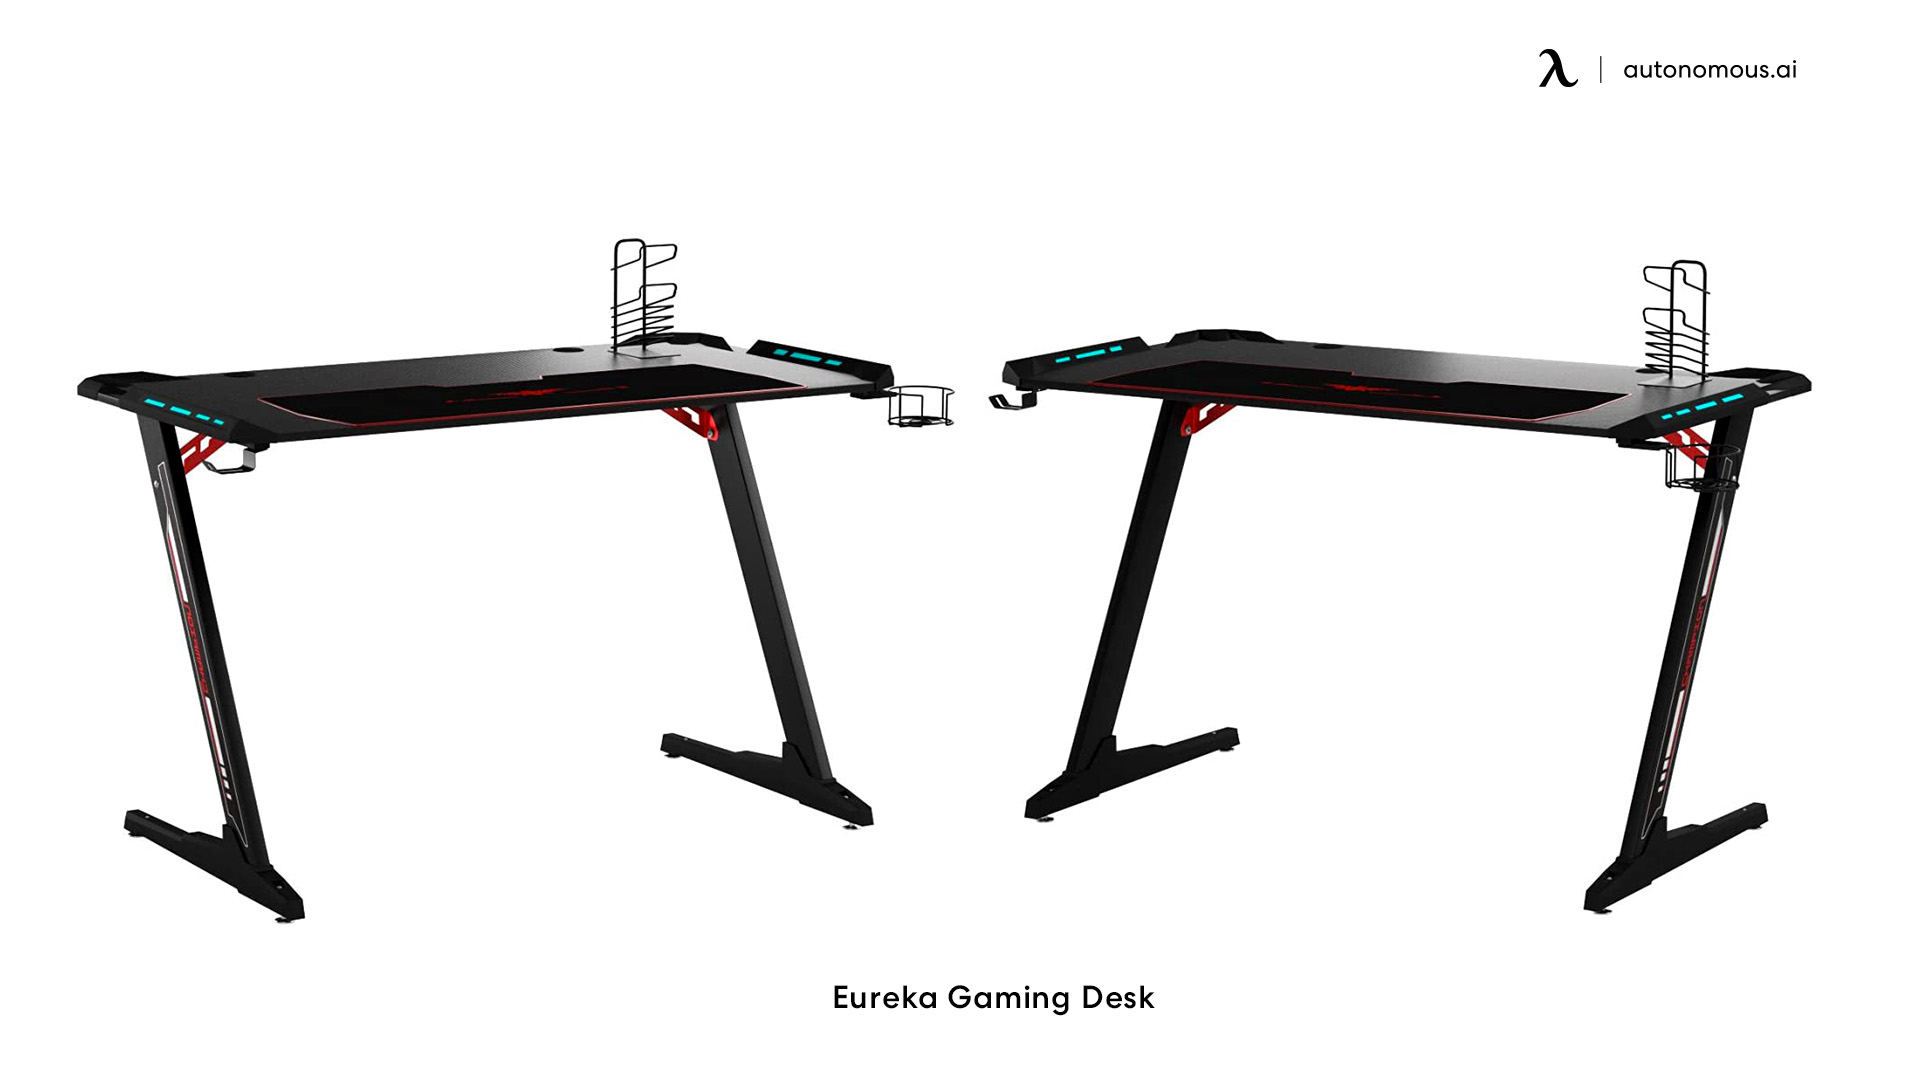 Eureka Gaming Desk